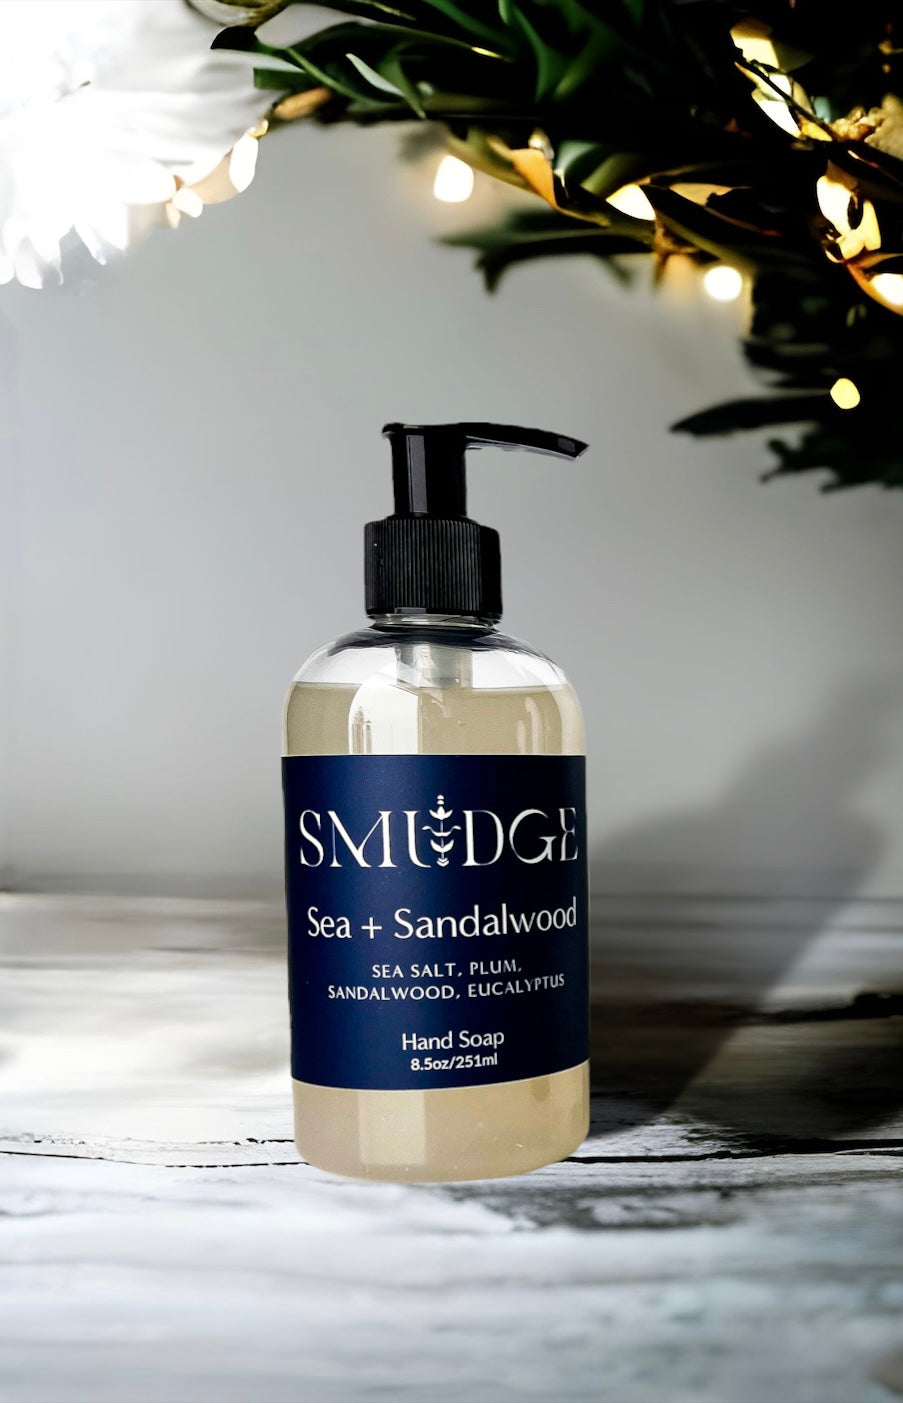 Sea + Sandalwood Hand Soap 8.5oz